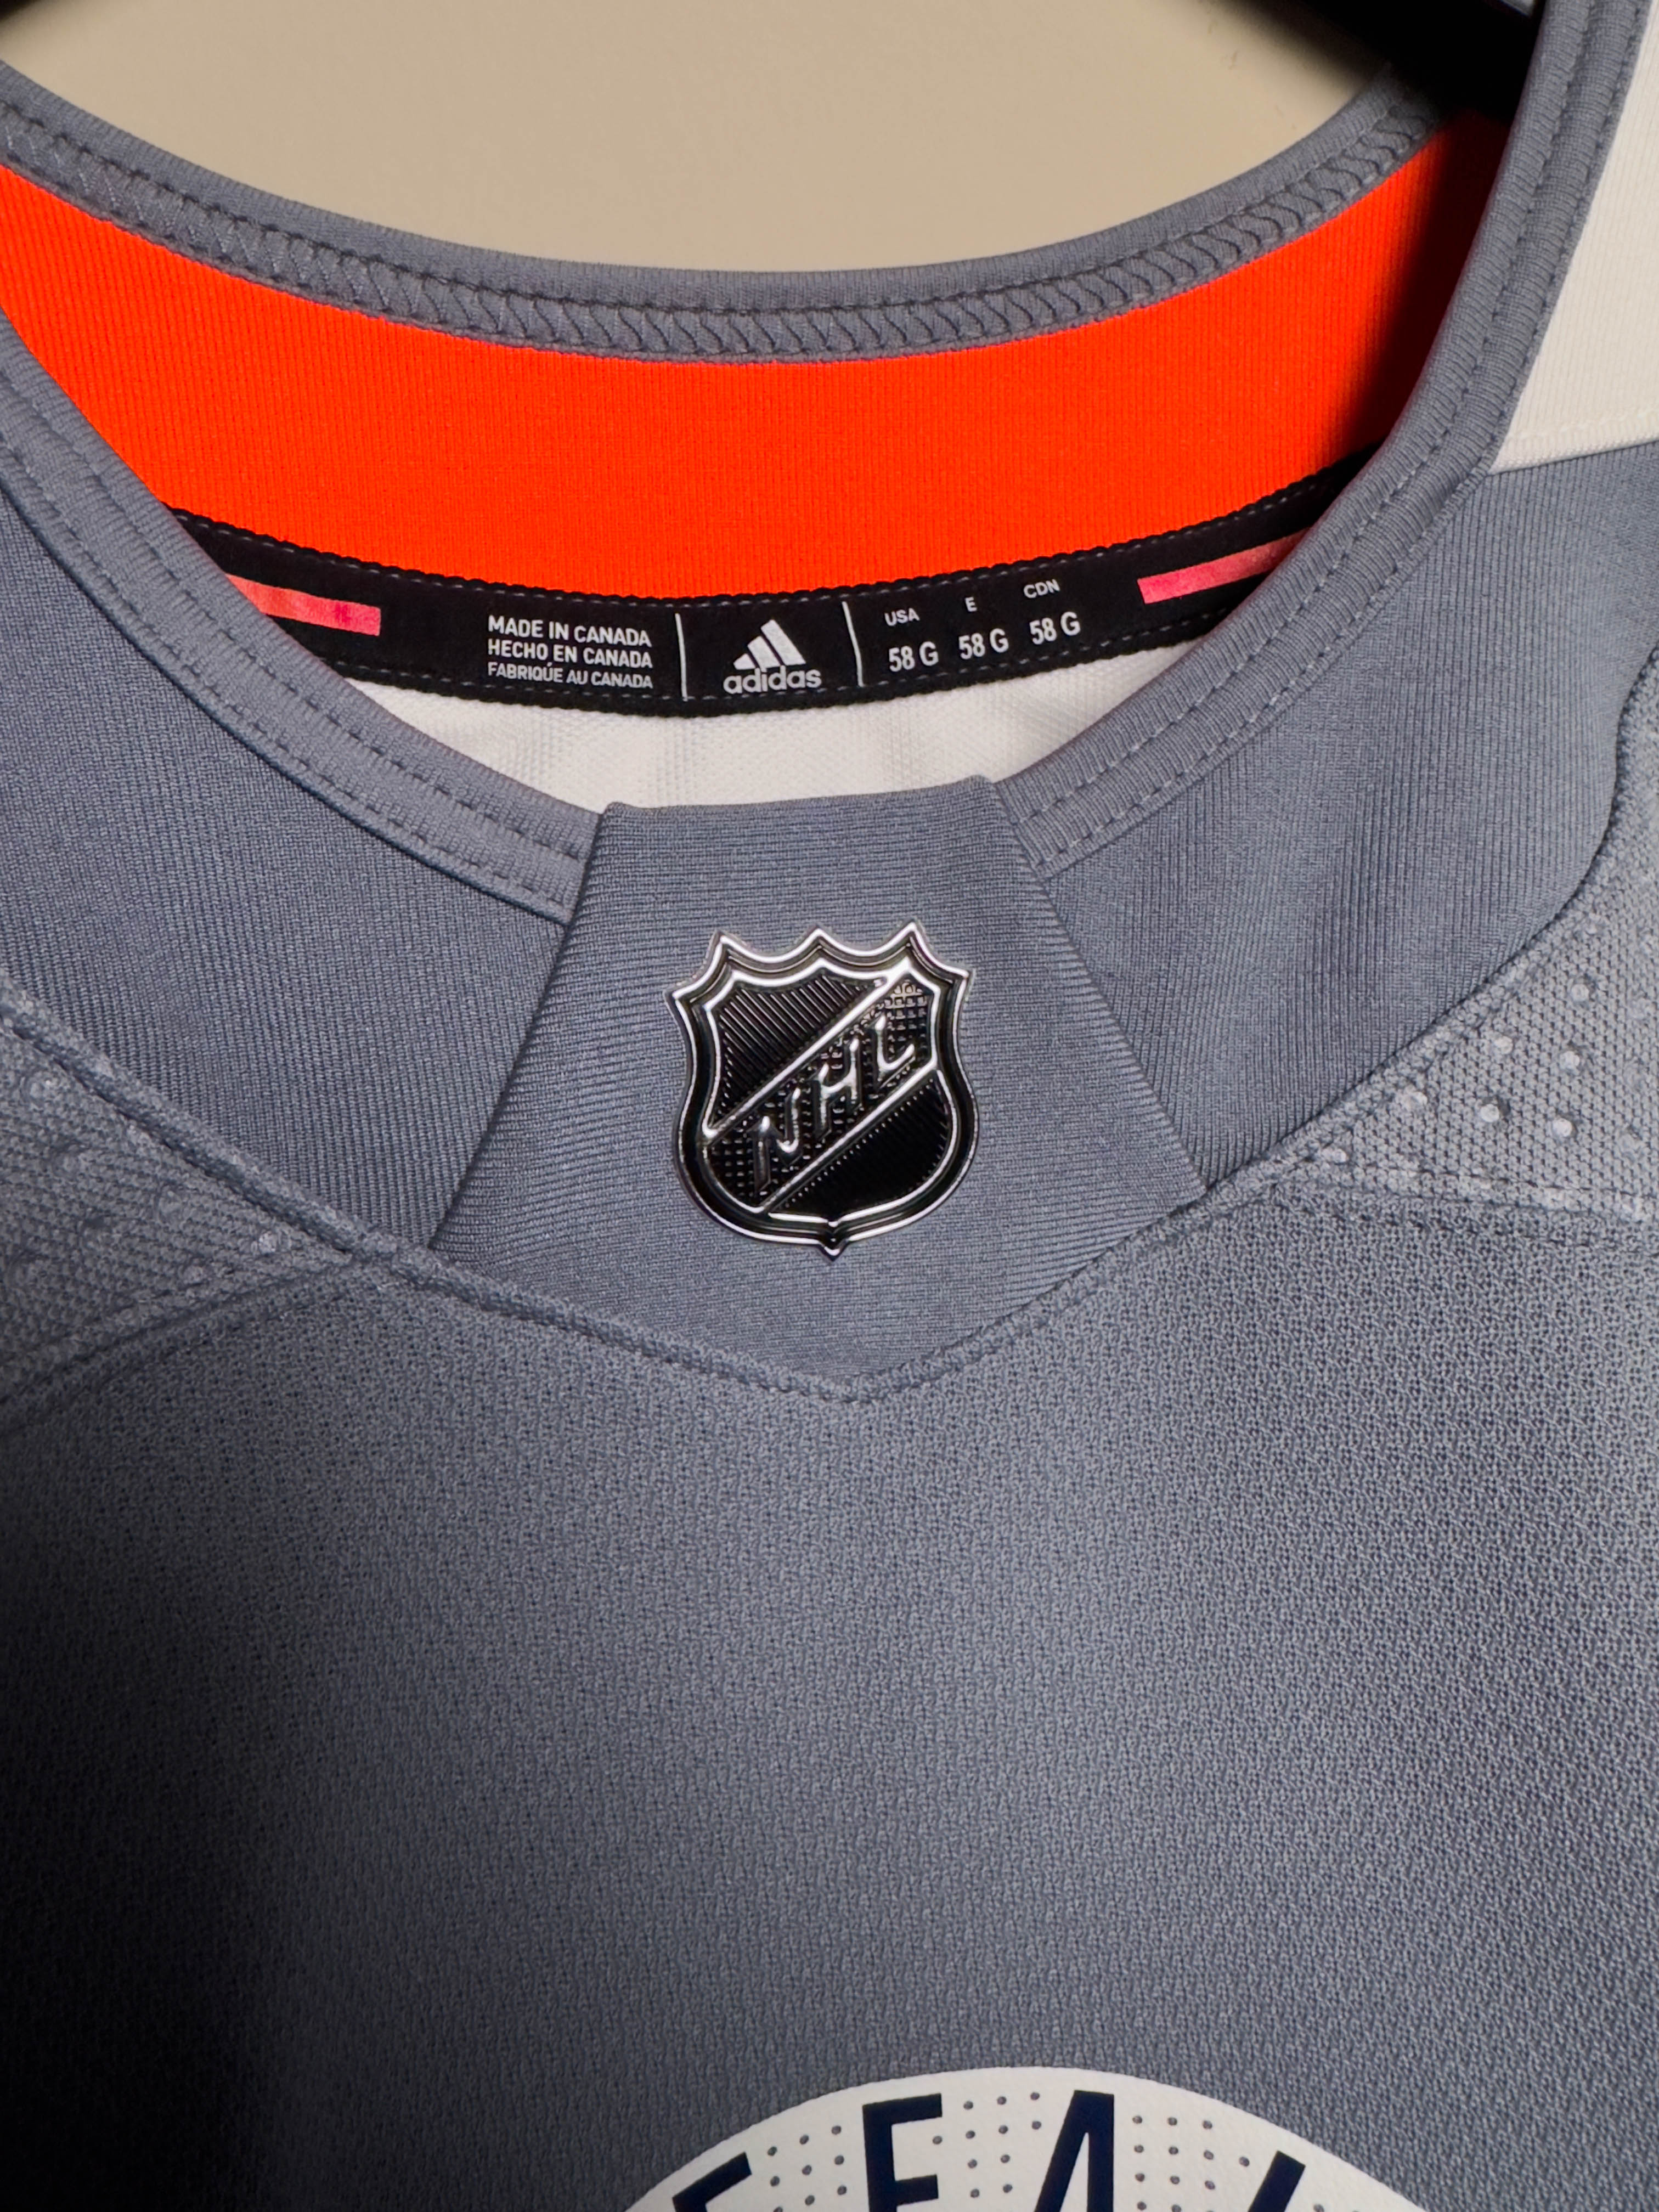 Tampa Bay Lightning NHL Adidas MiC Hockey Jersey Practice Sz 58 Made In  Canada